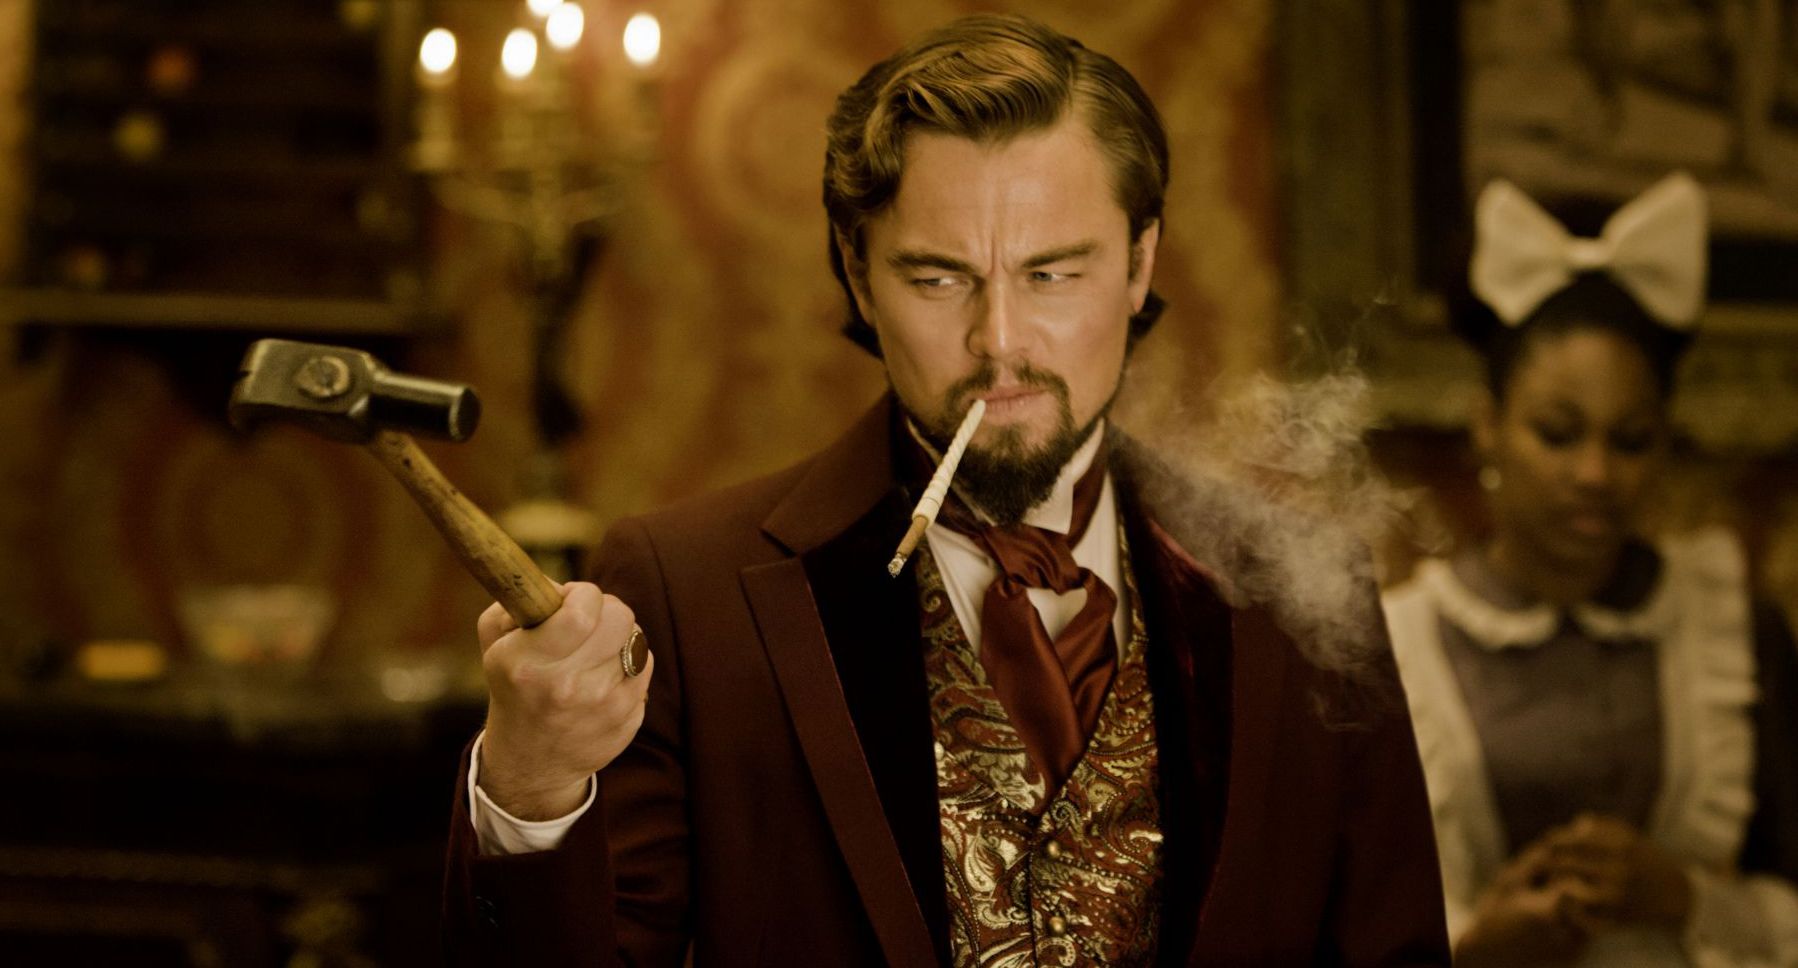 Di Caprio shows a talent for dark comedy in Django Unchained